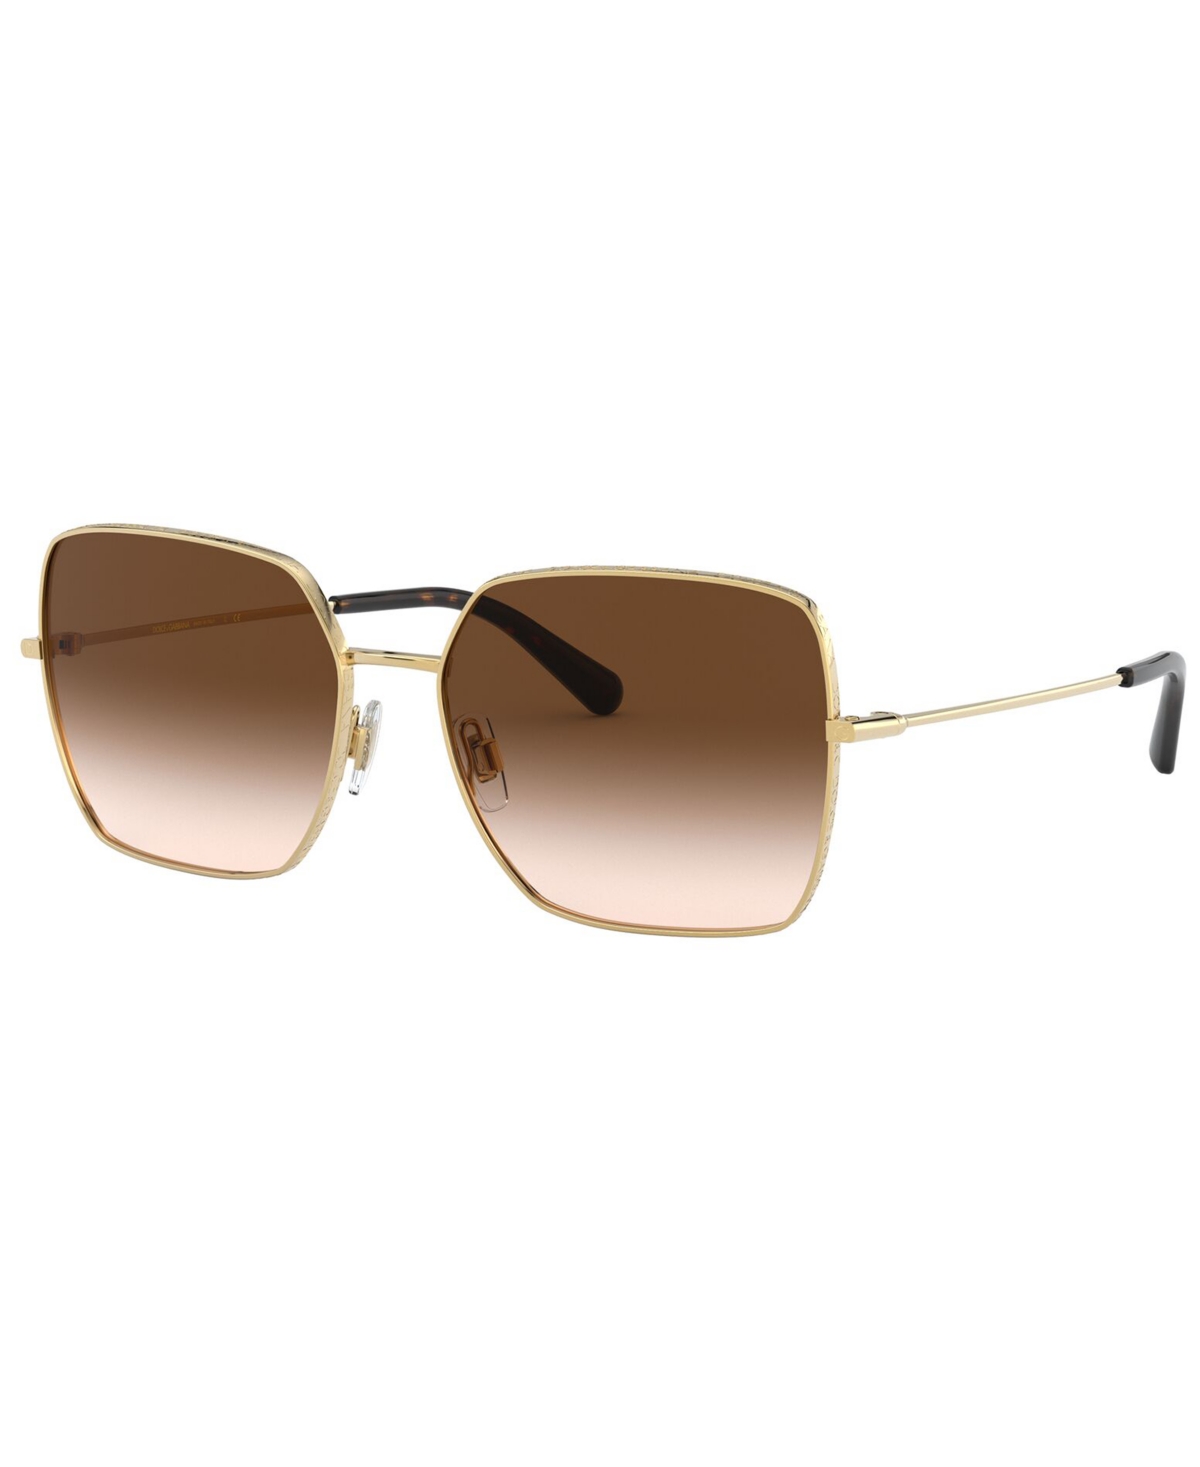 Dolce&Gabbana Women's Sunglasses, DG2242 - GOLD/BLACK/GREY GRADIENT